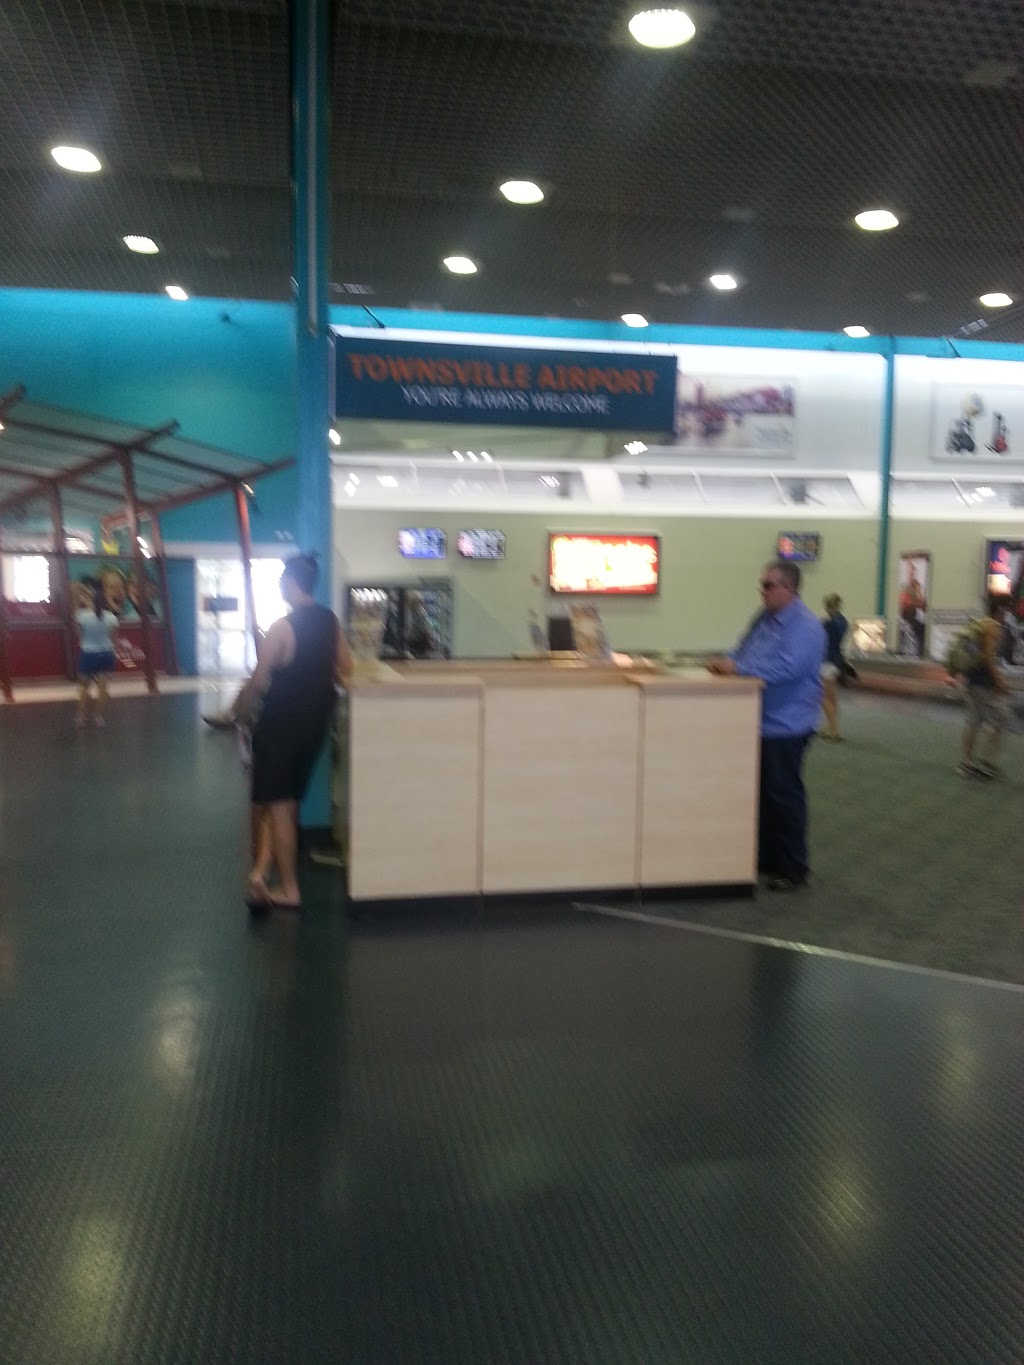 Redspot Car Rentals | Townsville Airport, In terminal, Coral Sea Dr, Garbutt QLD 4814, Australia | Phone: (07) 4779 3891